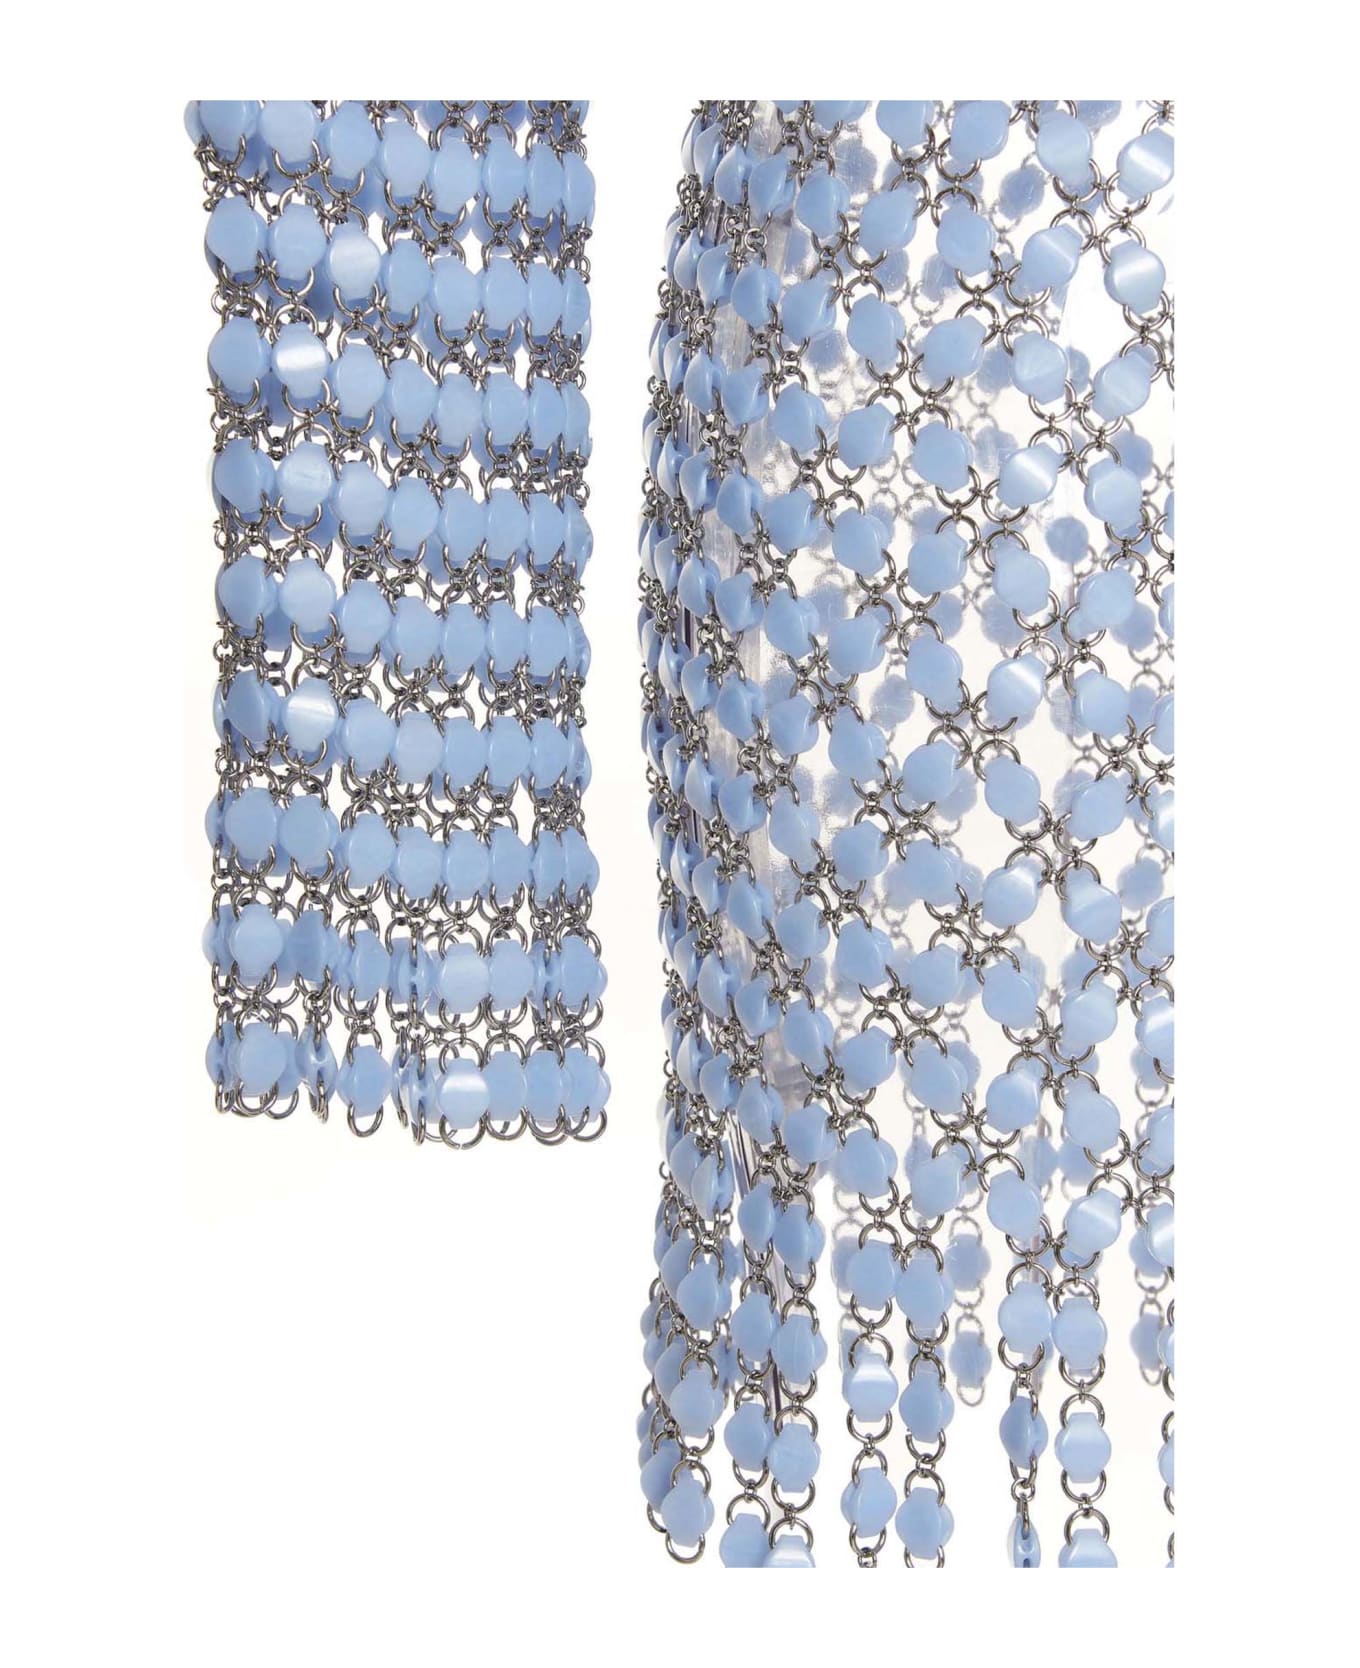 Paco Rabanne Acrylic Knit Dress - Light Blue